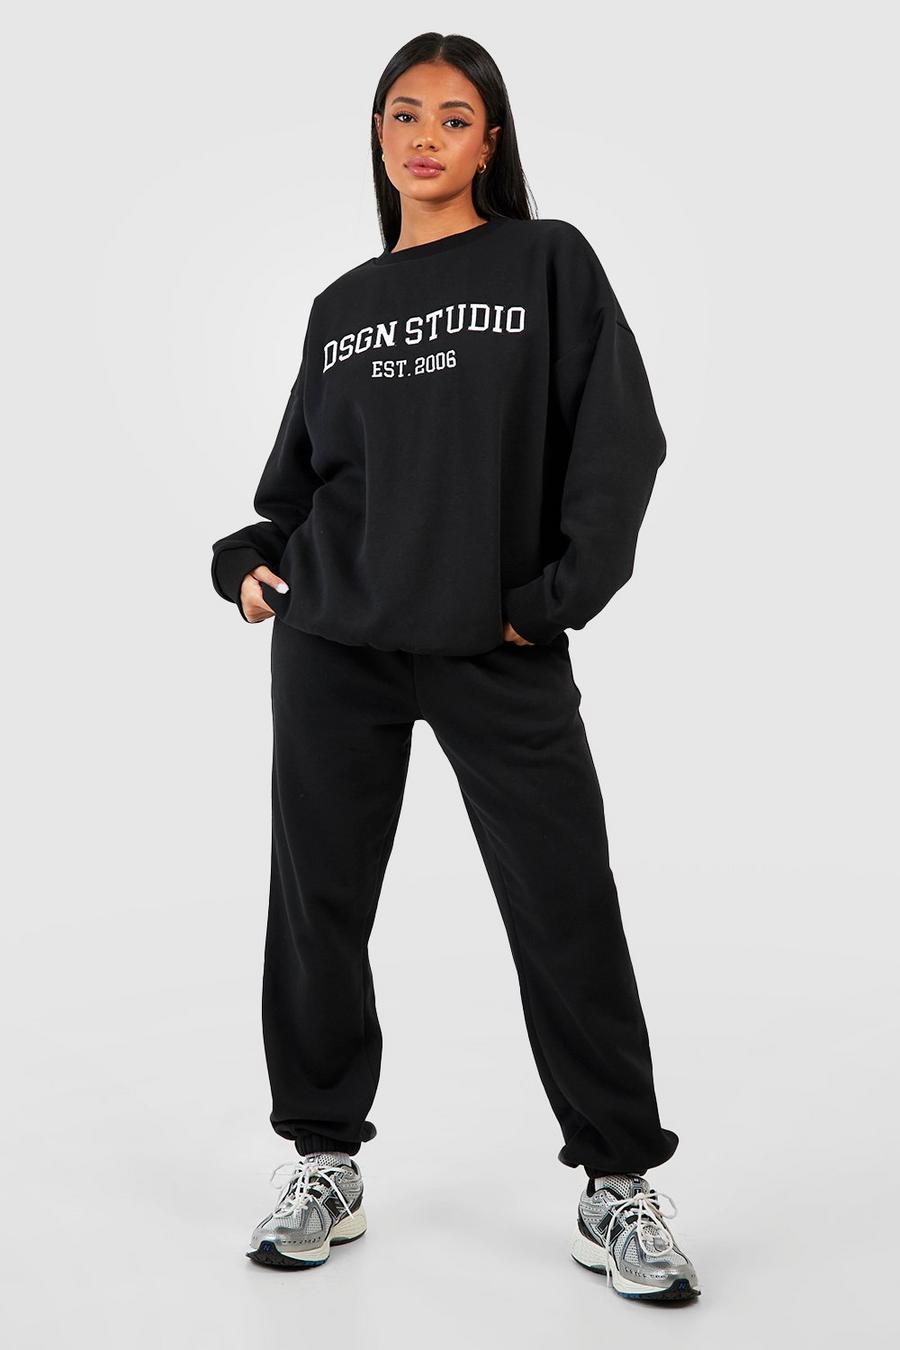 Sweatshirt-Trainingsanzug mit Dsgn Studio Appliation, Black